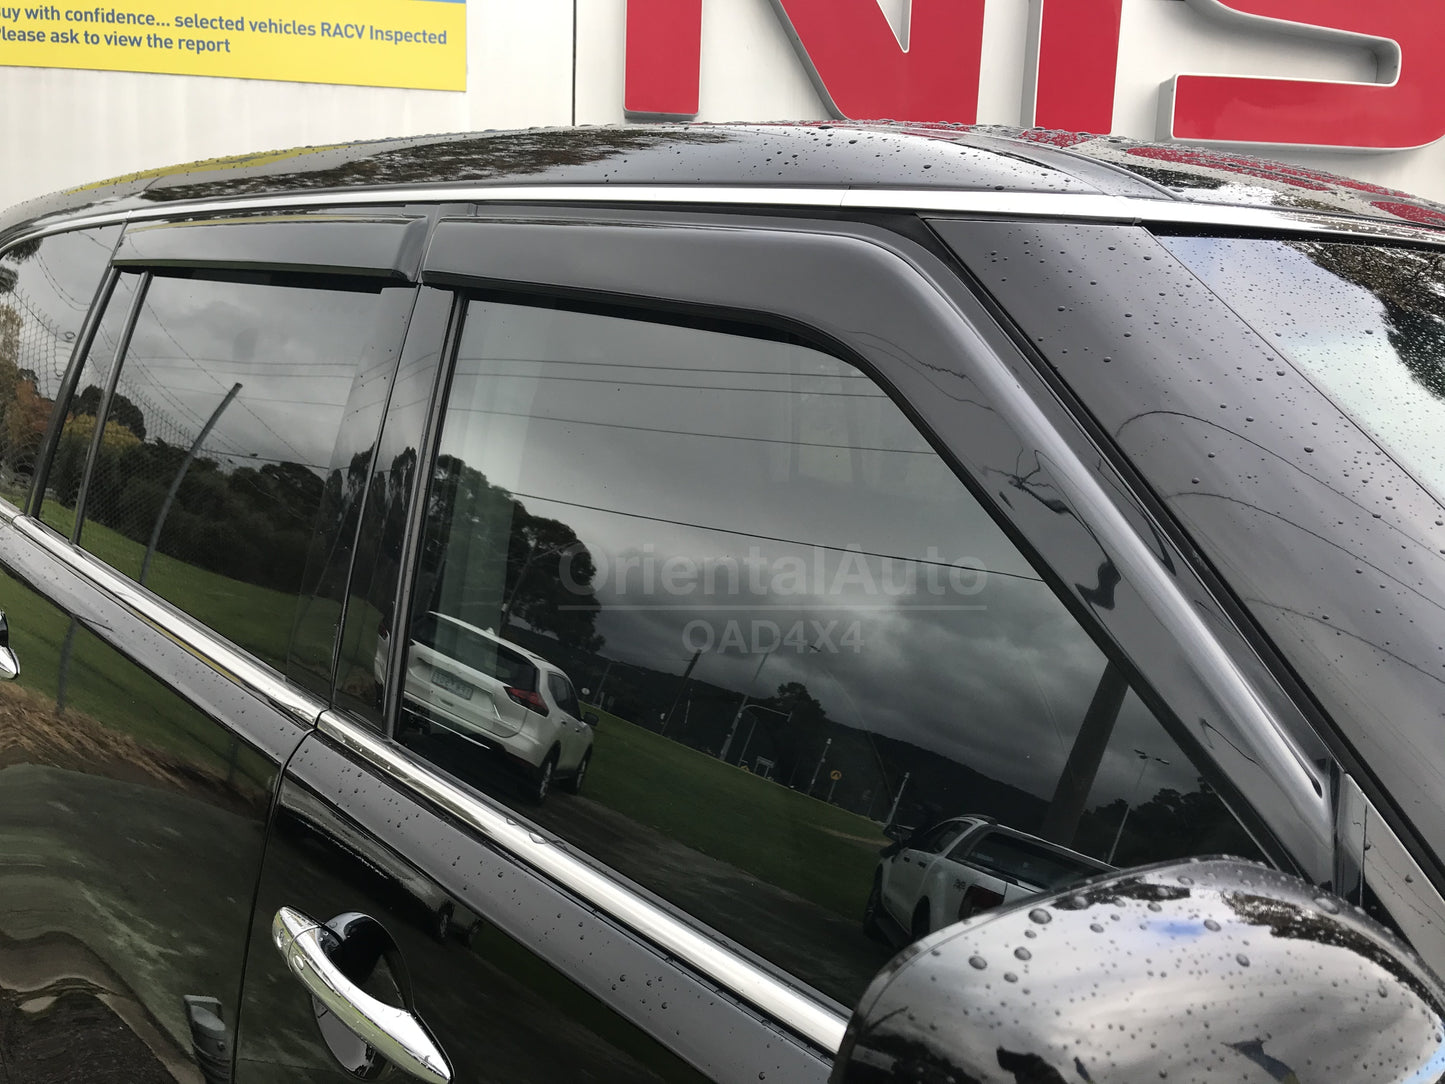 Injection Bonnet Protector & Luxury Weathershields for Nissan Patrol Y62 2019+ Weather Shields Window Visor Hood Protector Guard